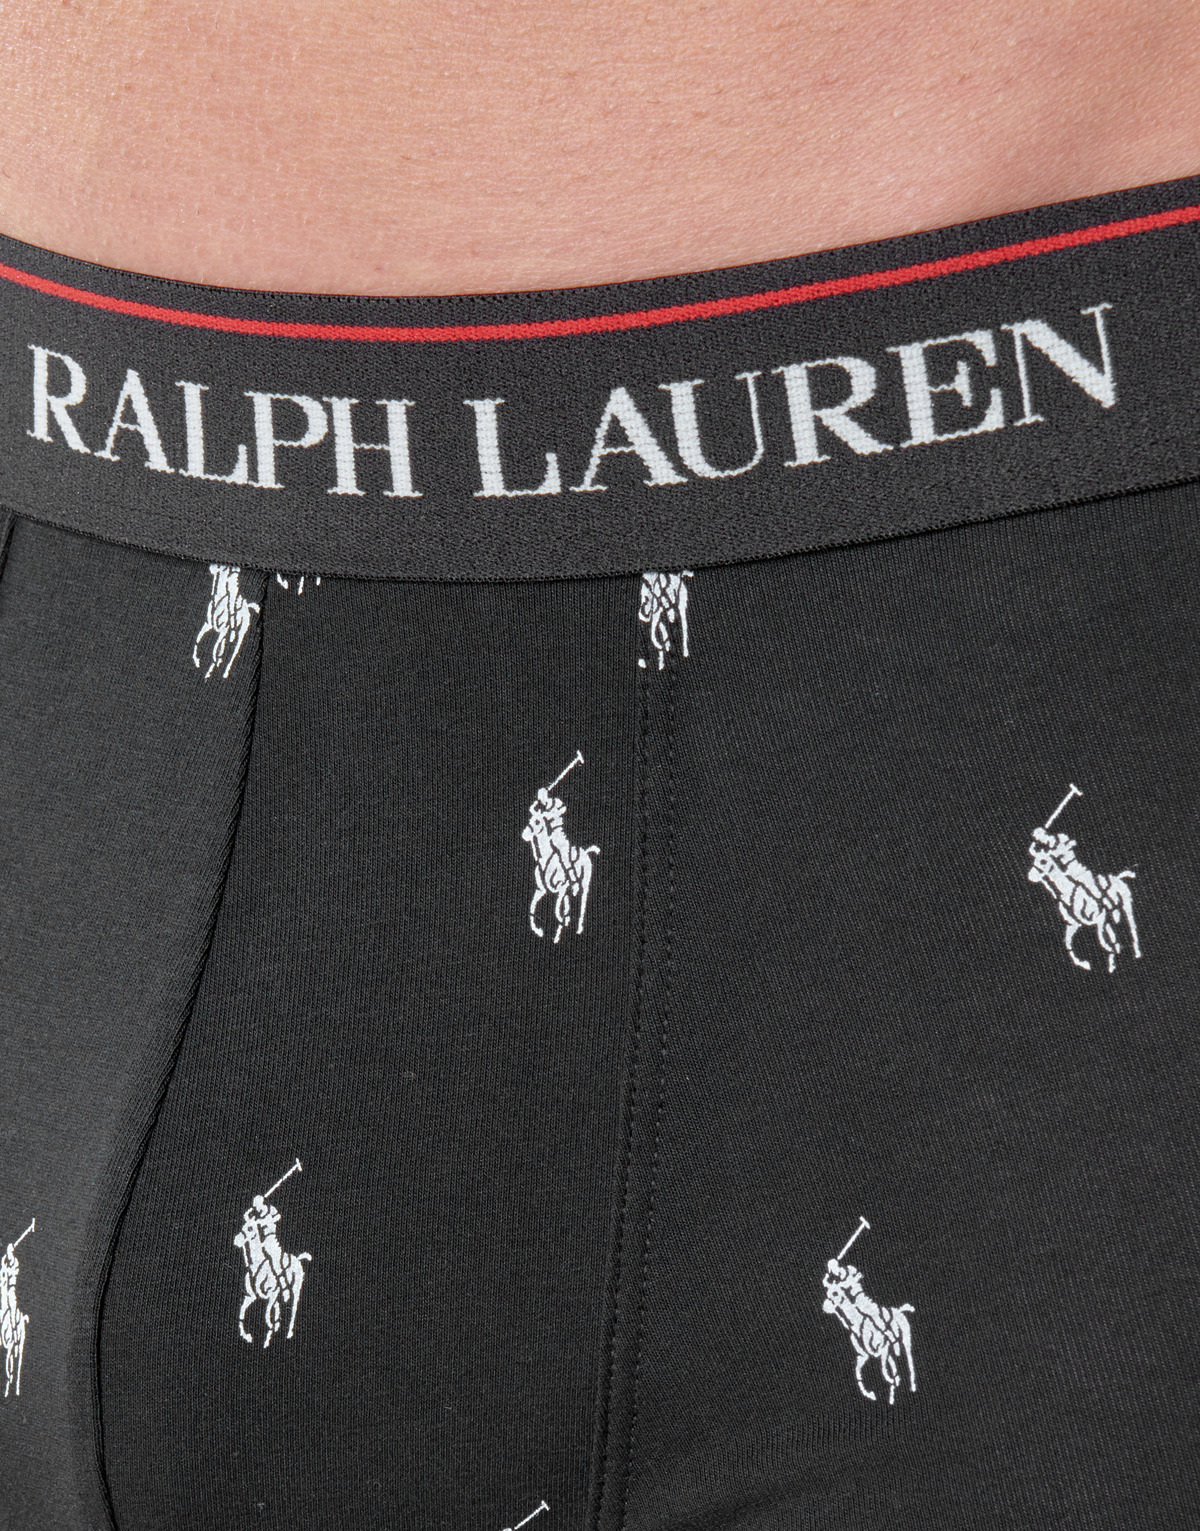 Polo Ralph Lauren Noir / Blanc CLASSIC TRUNK X3 PDdQp2CI